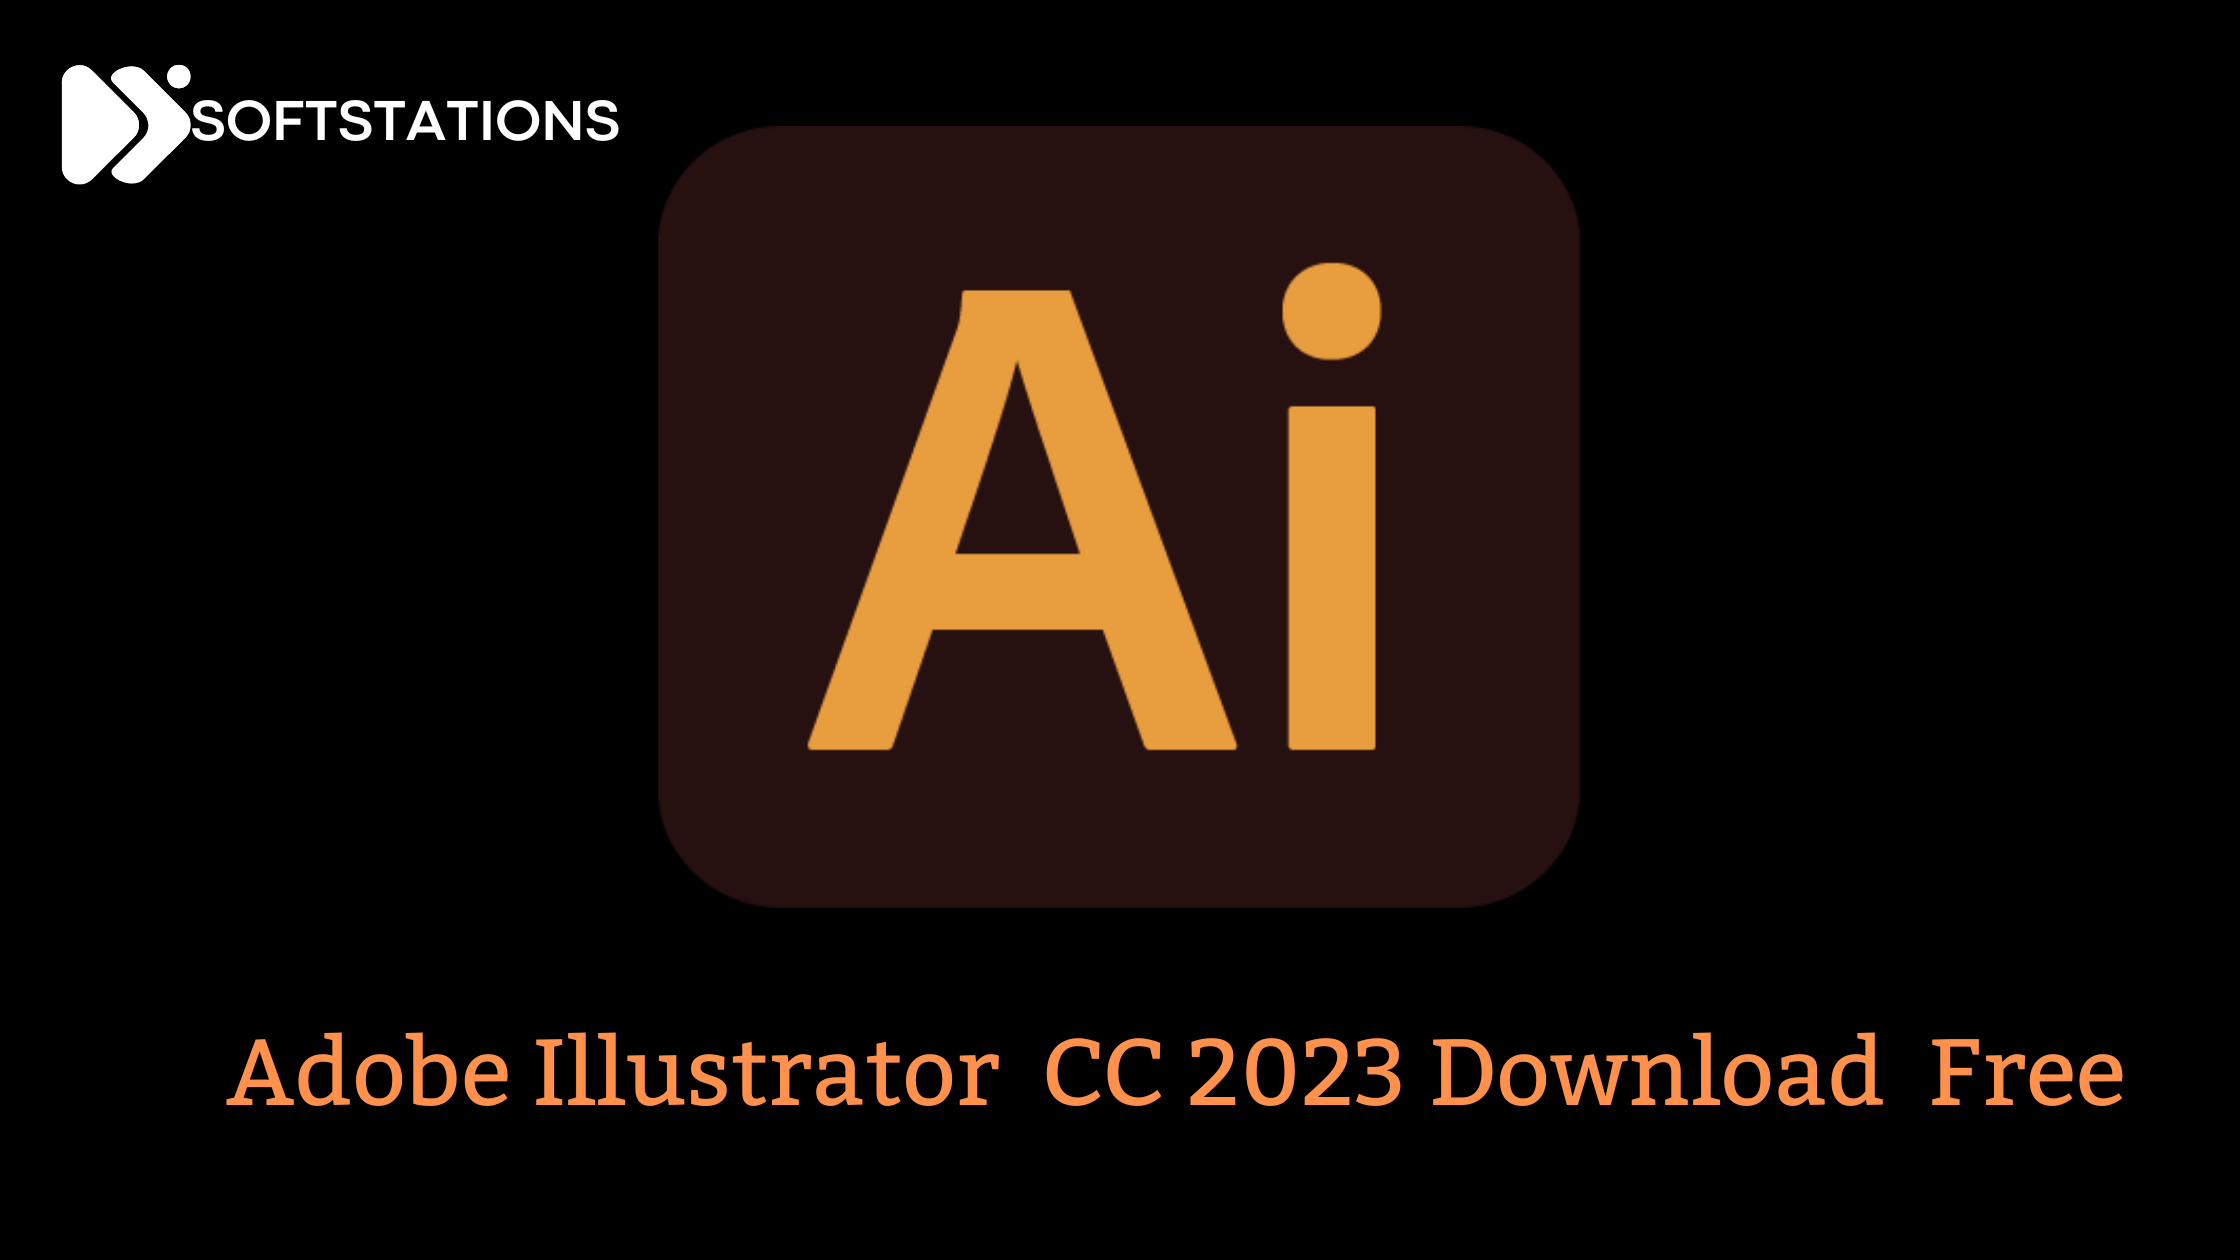 Adobe Illustrator CC 2023 Free Download - softstations.com